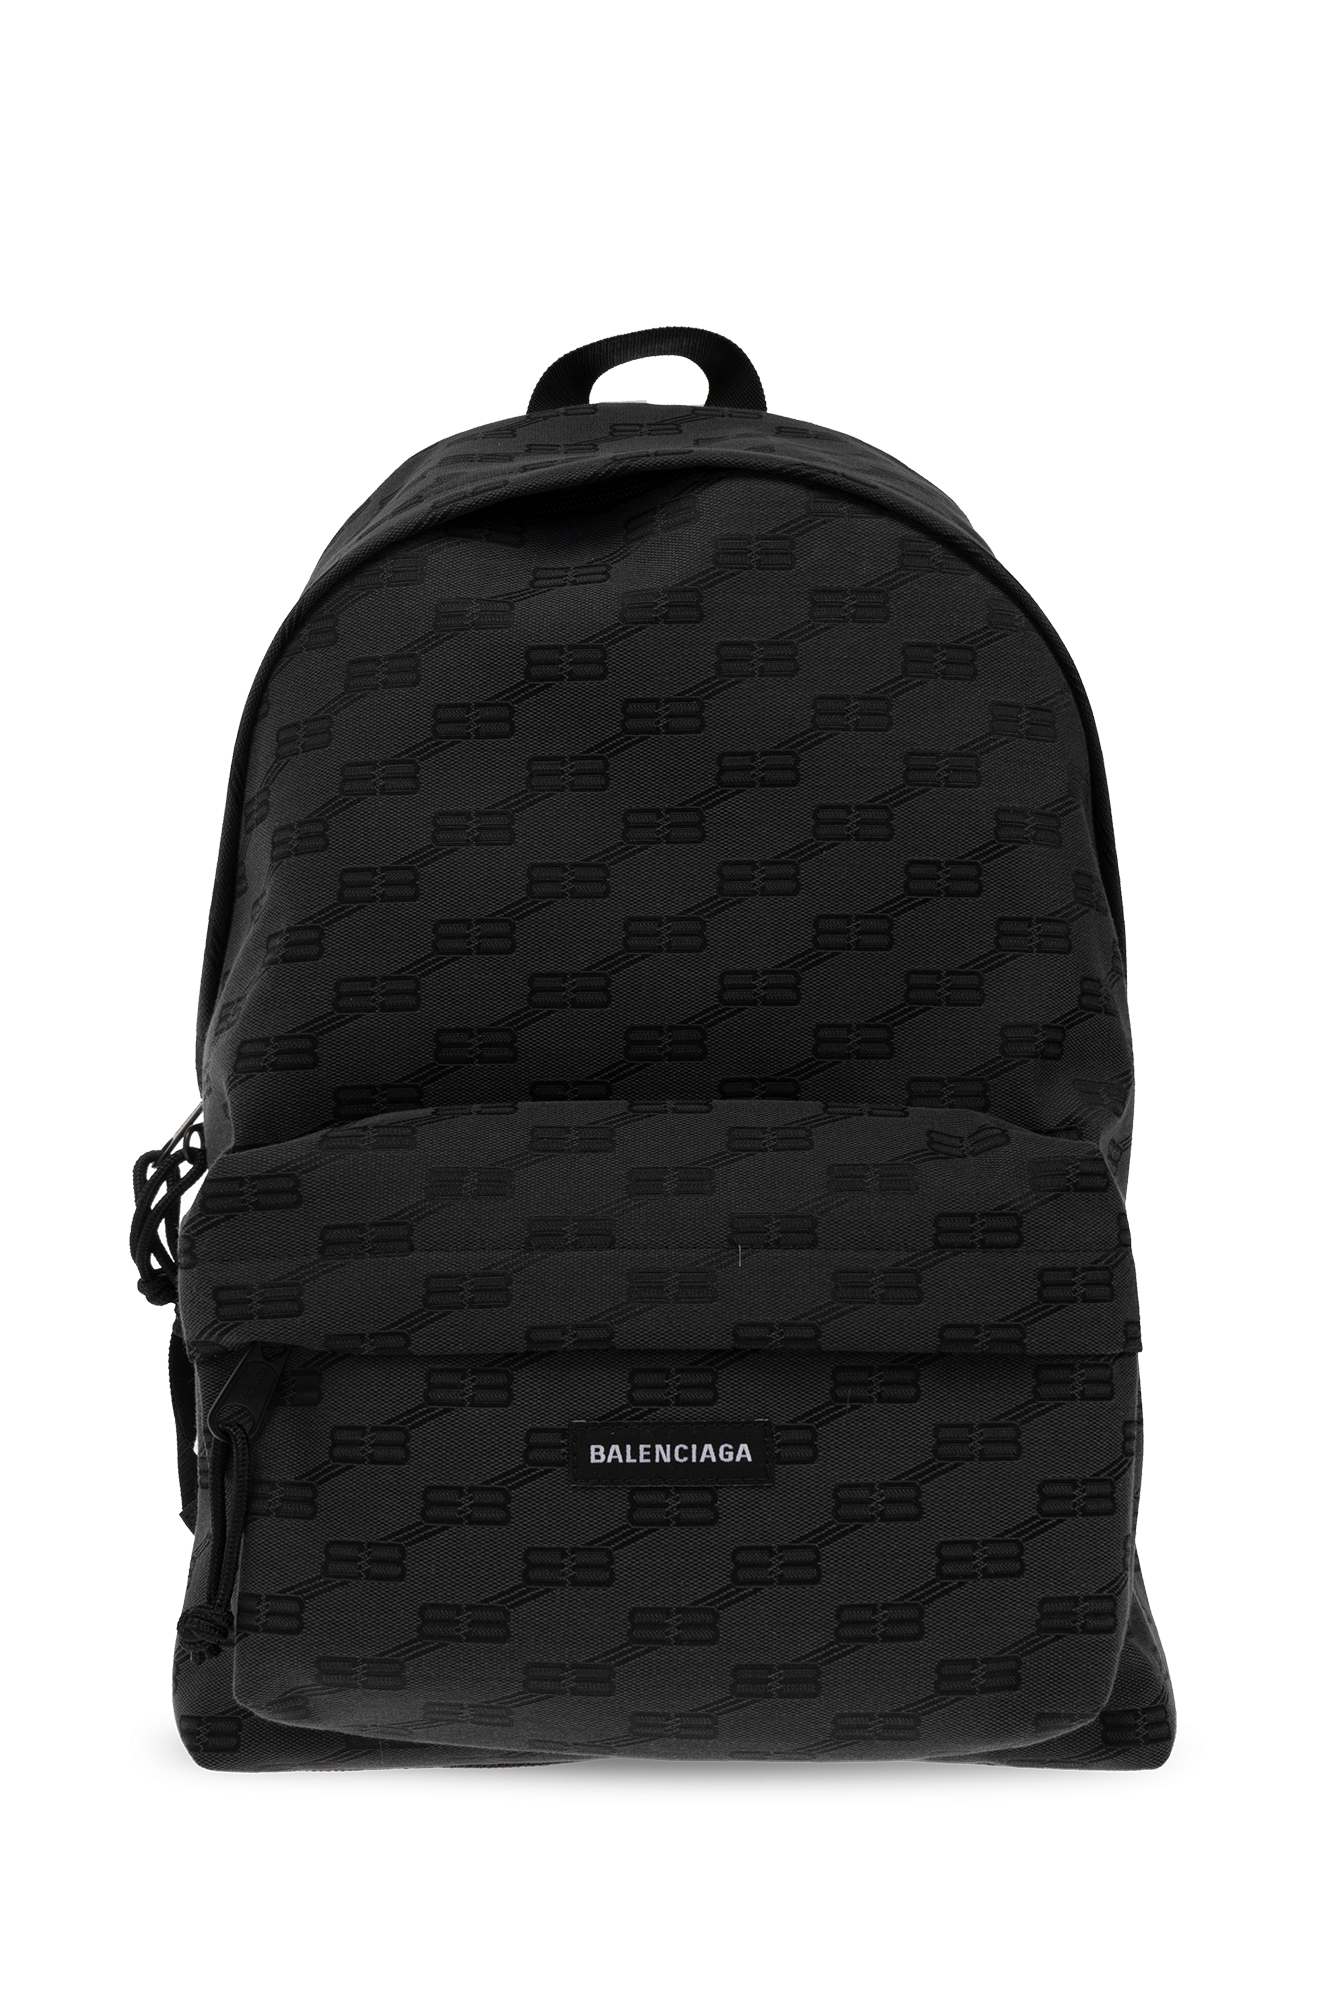 Balenciaga 'Signature' monogrammed backpack, GenesinlifeShops, multi-pocket laptop bag from